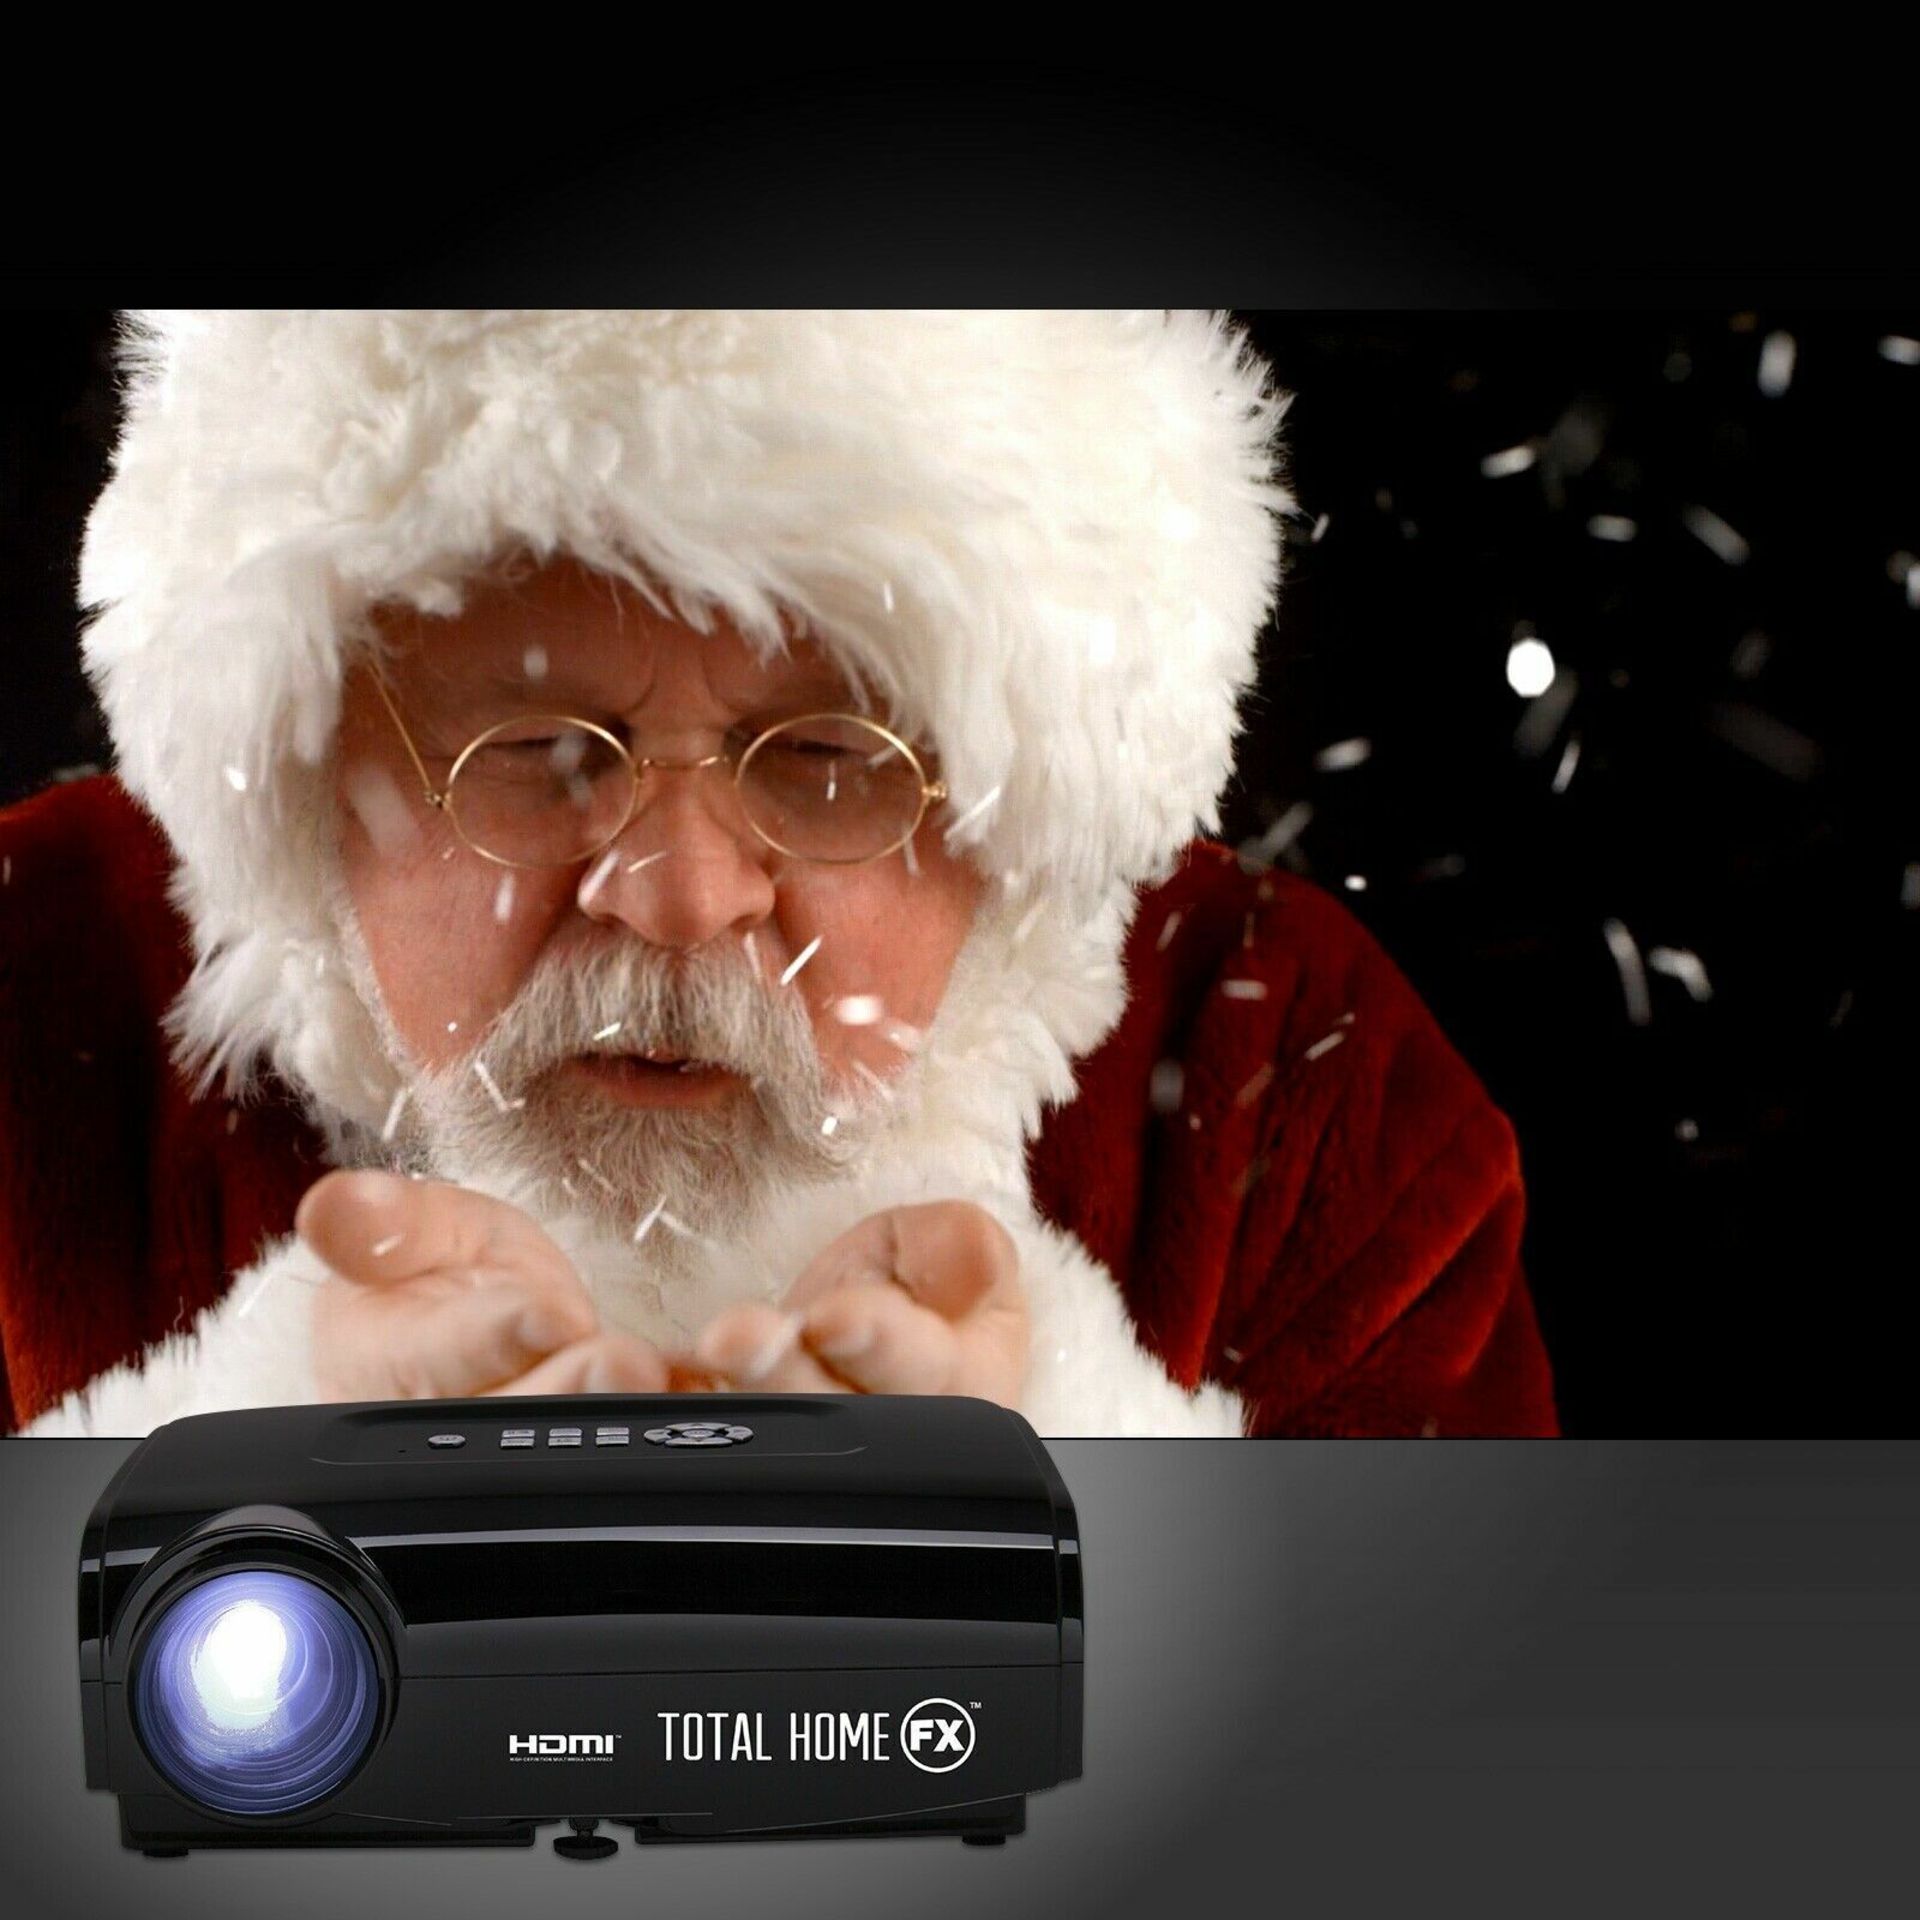 Total Home FX USB HDMI Projector 800 Series Halloween Christmas Window Display - Image 6 of 12